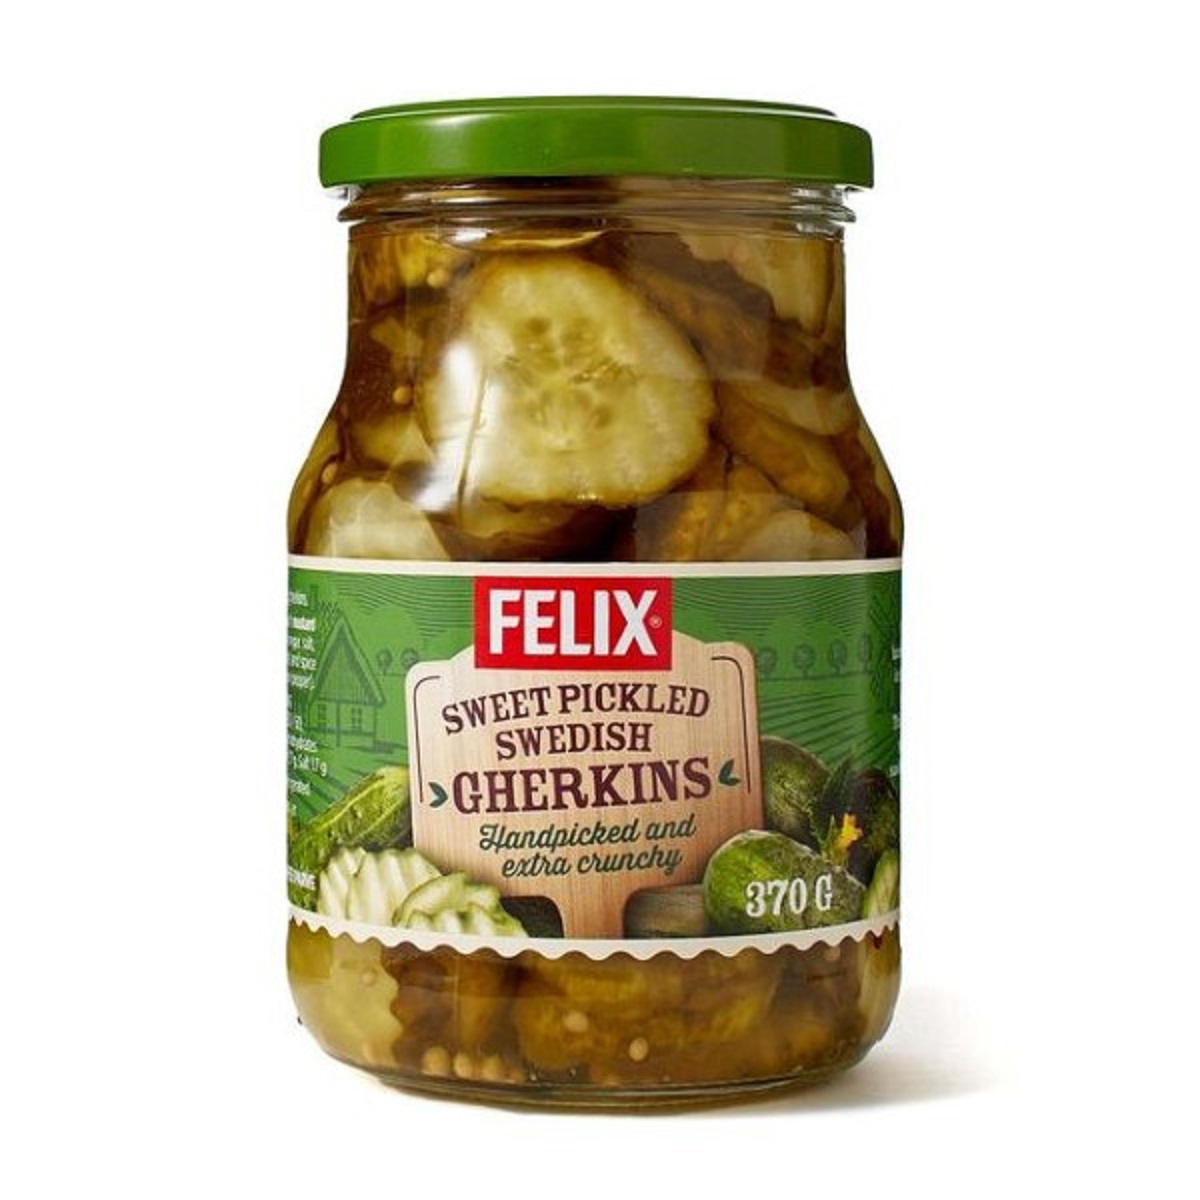 Felix Smorgasgurka Pickled Gherkins 370g